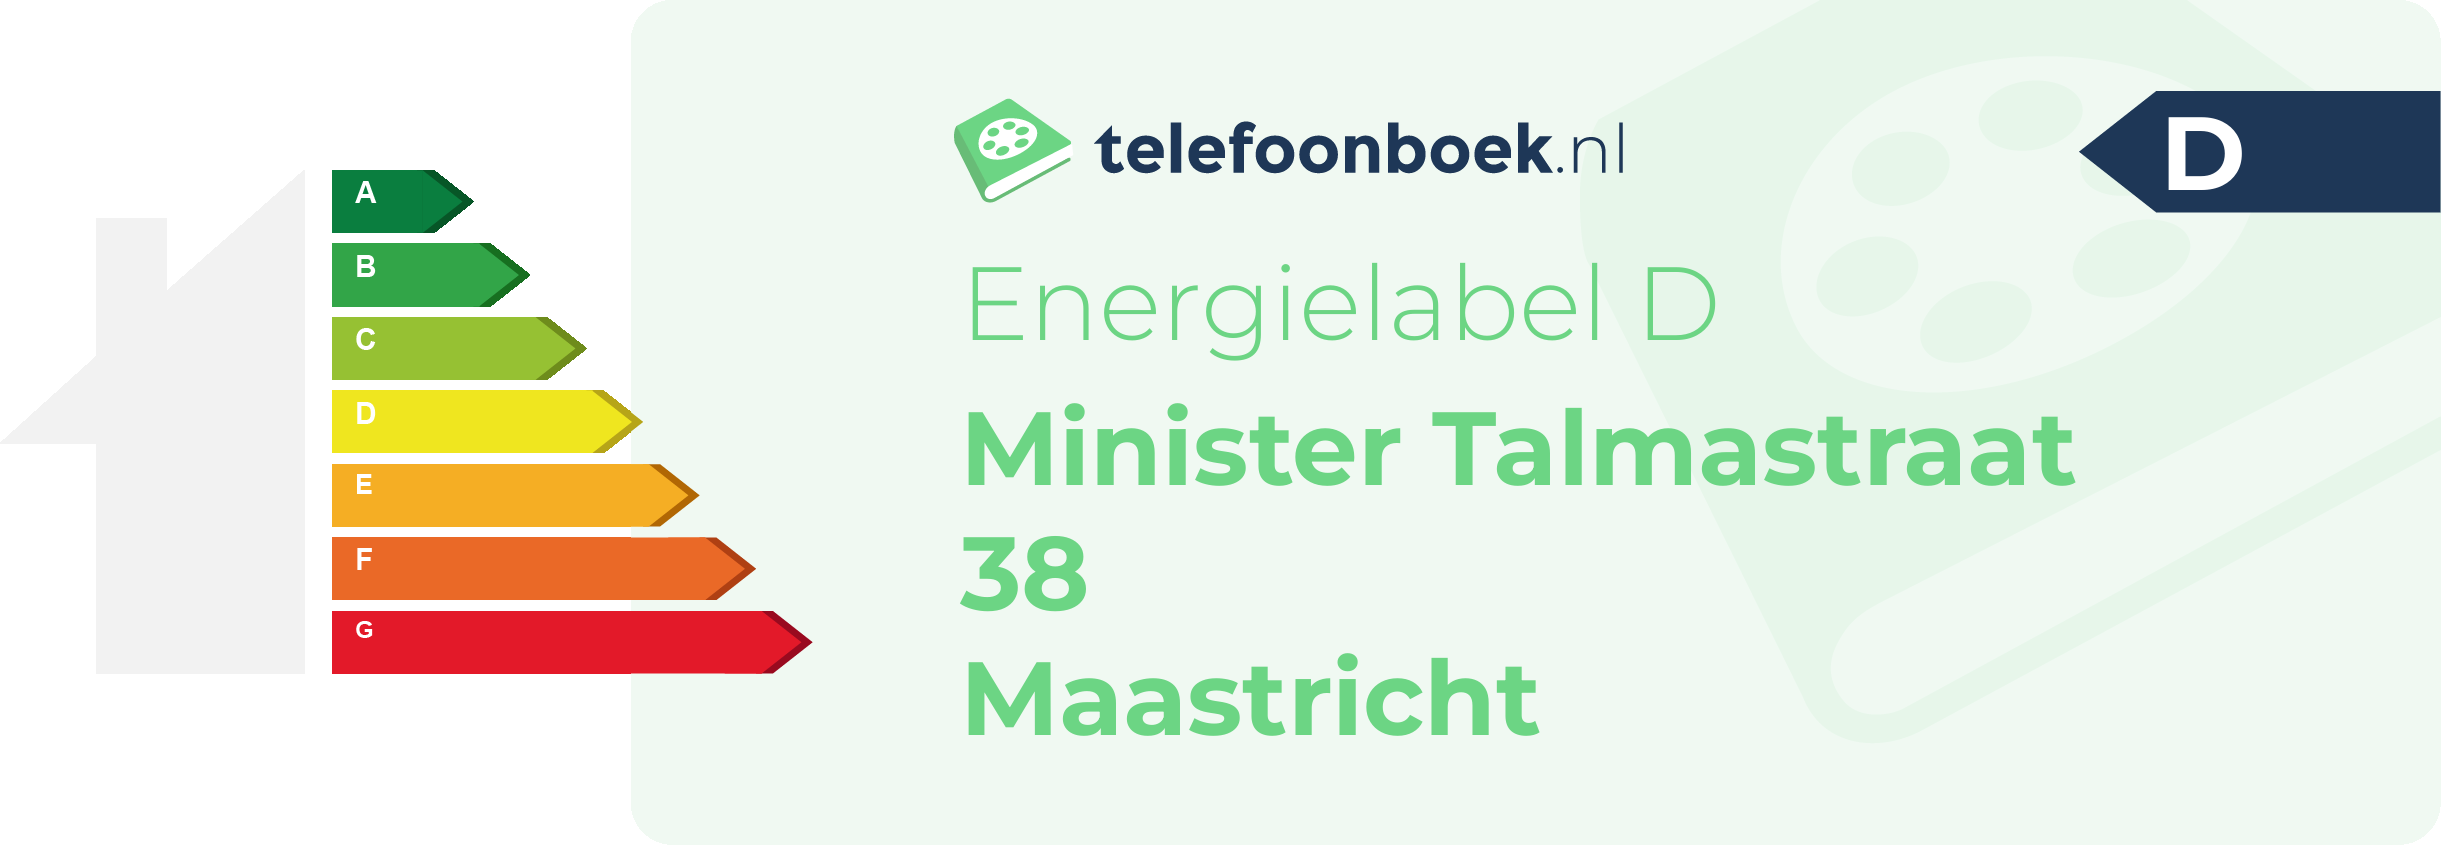 Energielabel Minister Talmastraat 38 Maastricht